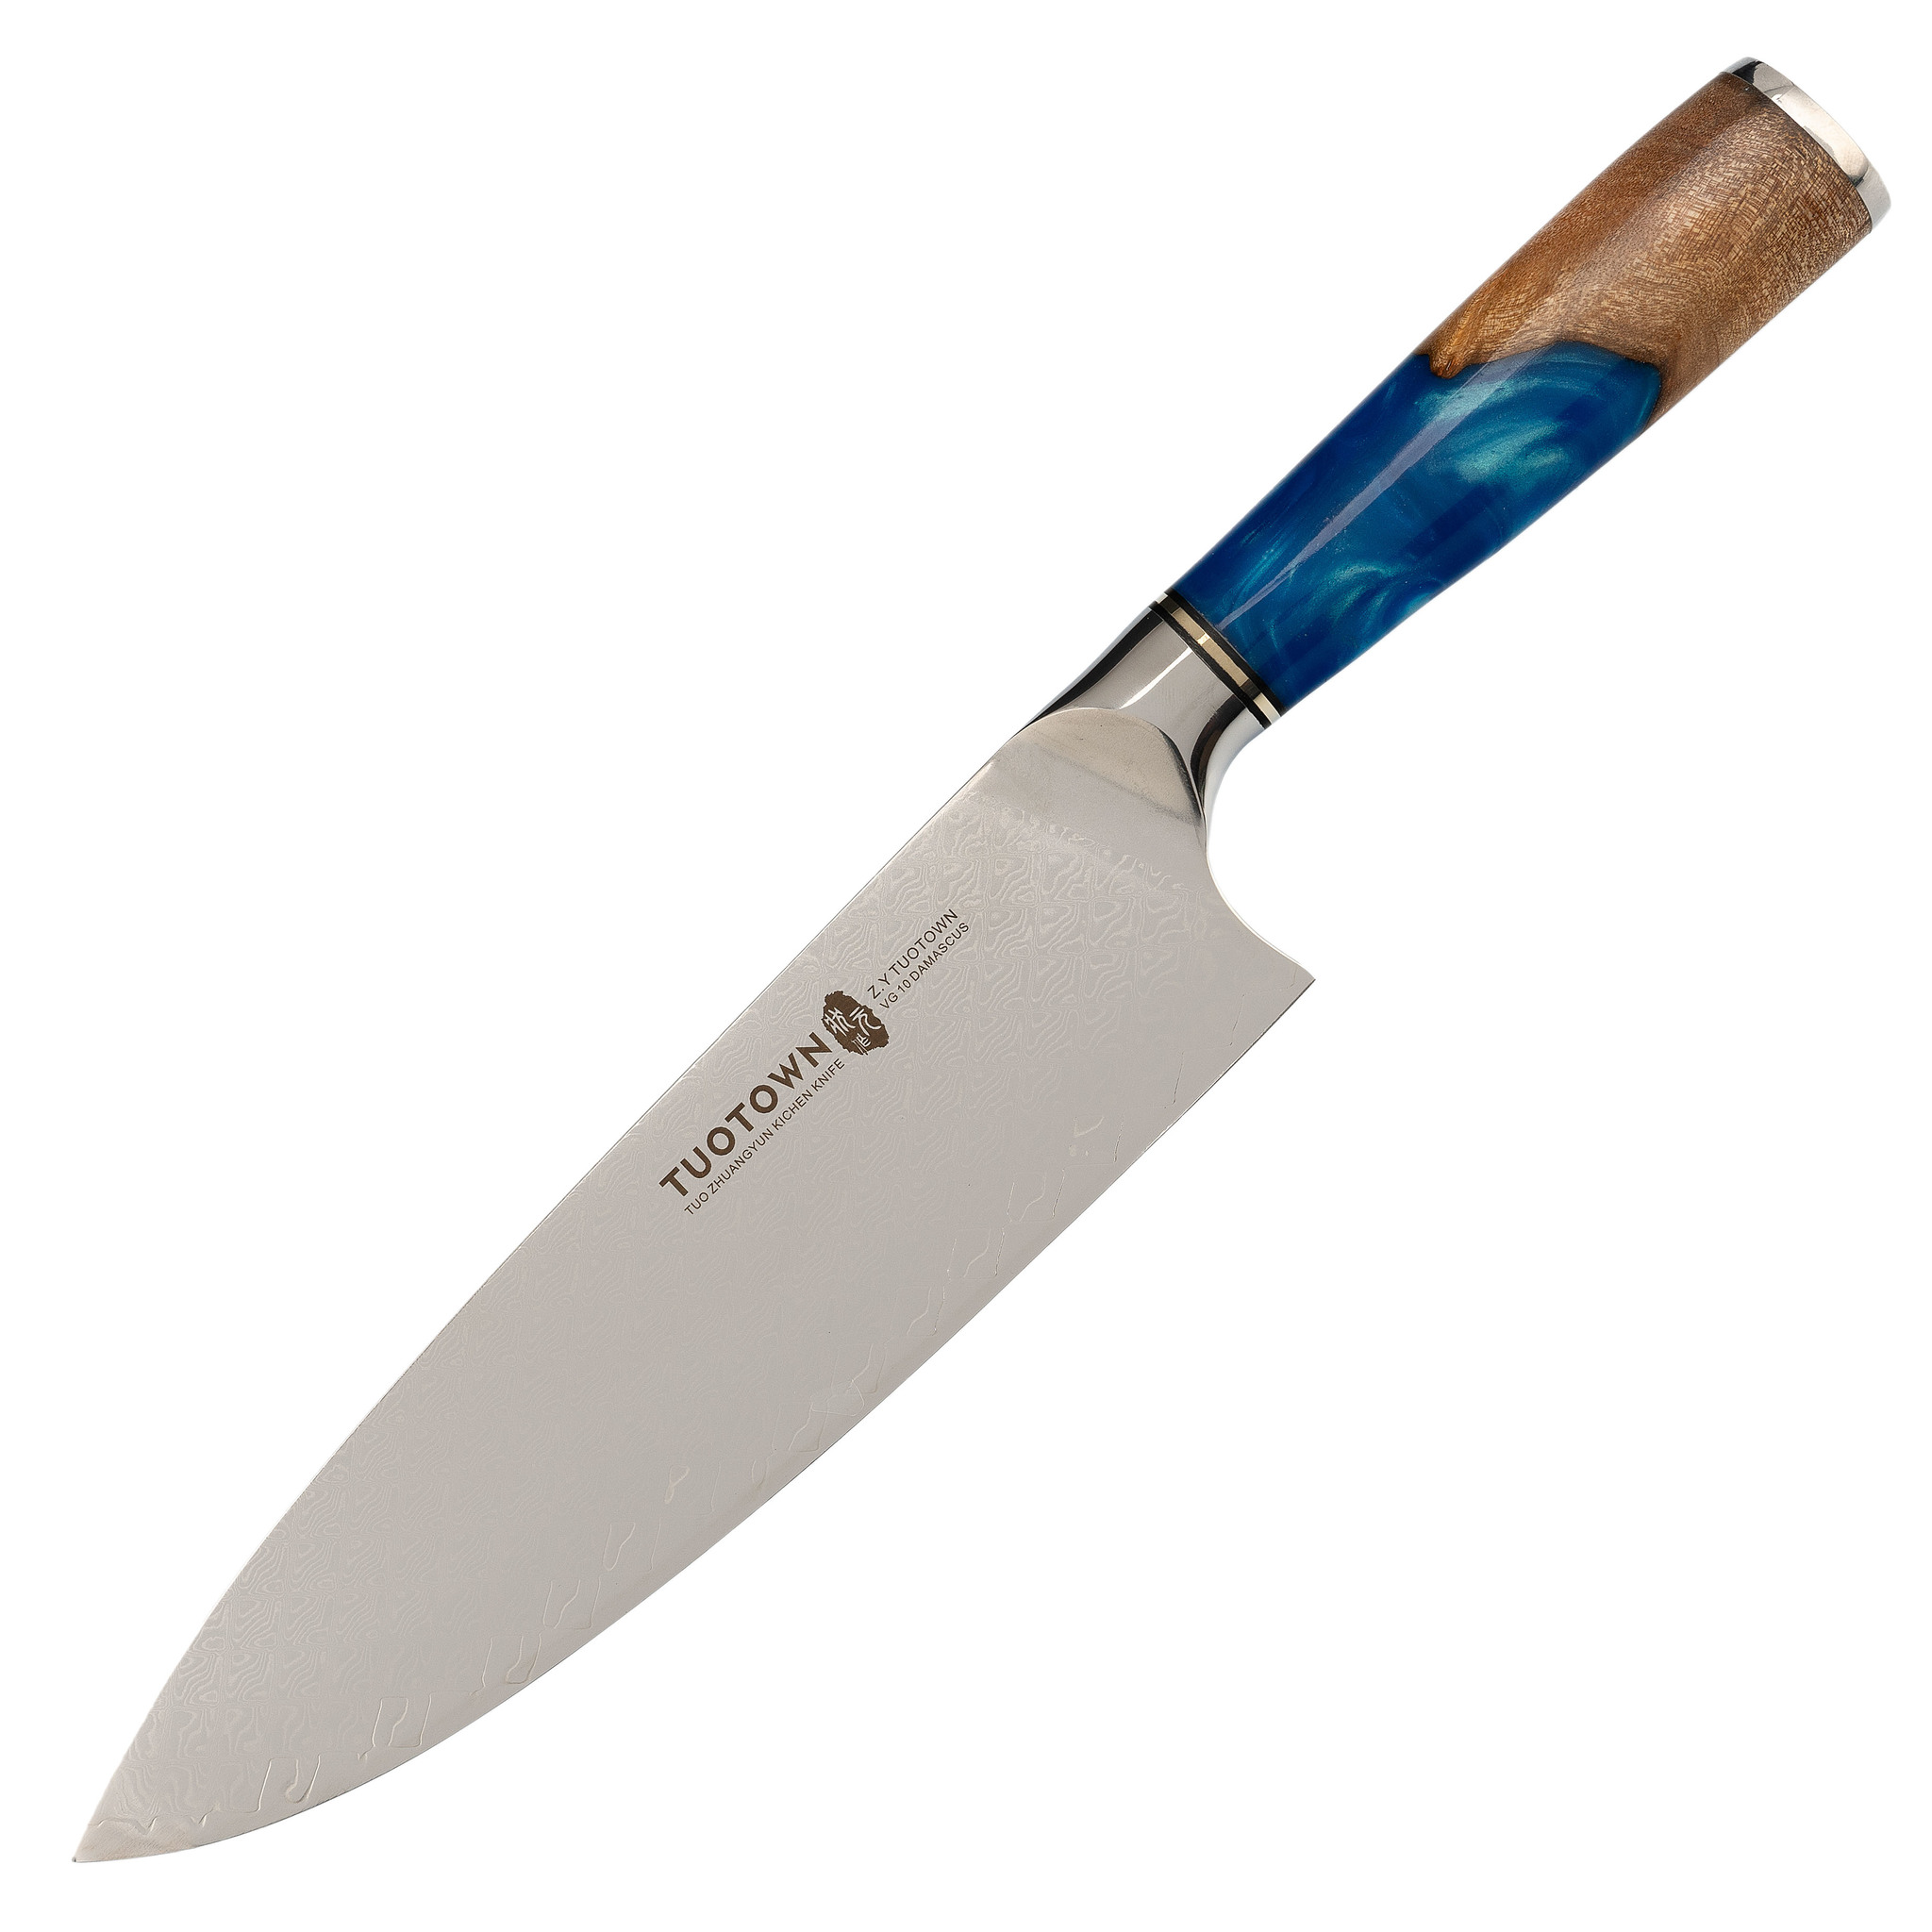 Кухонный шеф нож (Гуйто) Tuotown SG-001, сталь VG-10, рукоять дерево/эпоксидка